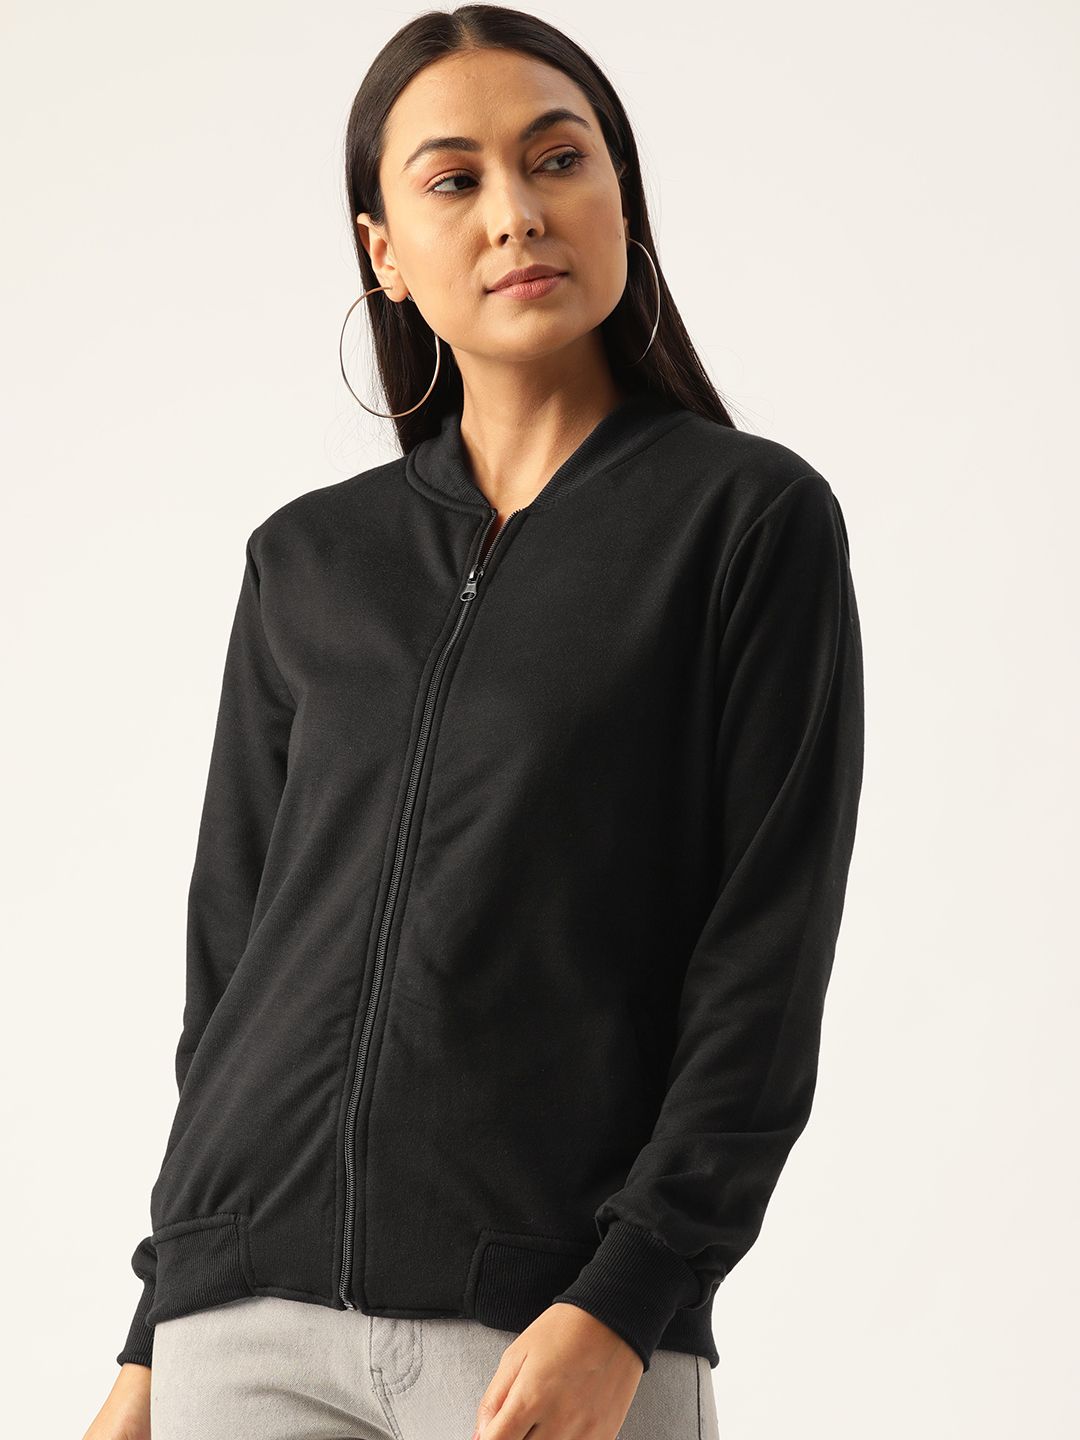 Belle Fille Black Solid Sweatshirt Price in India